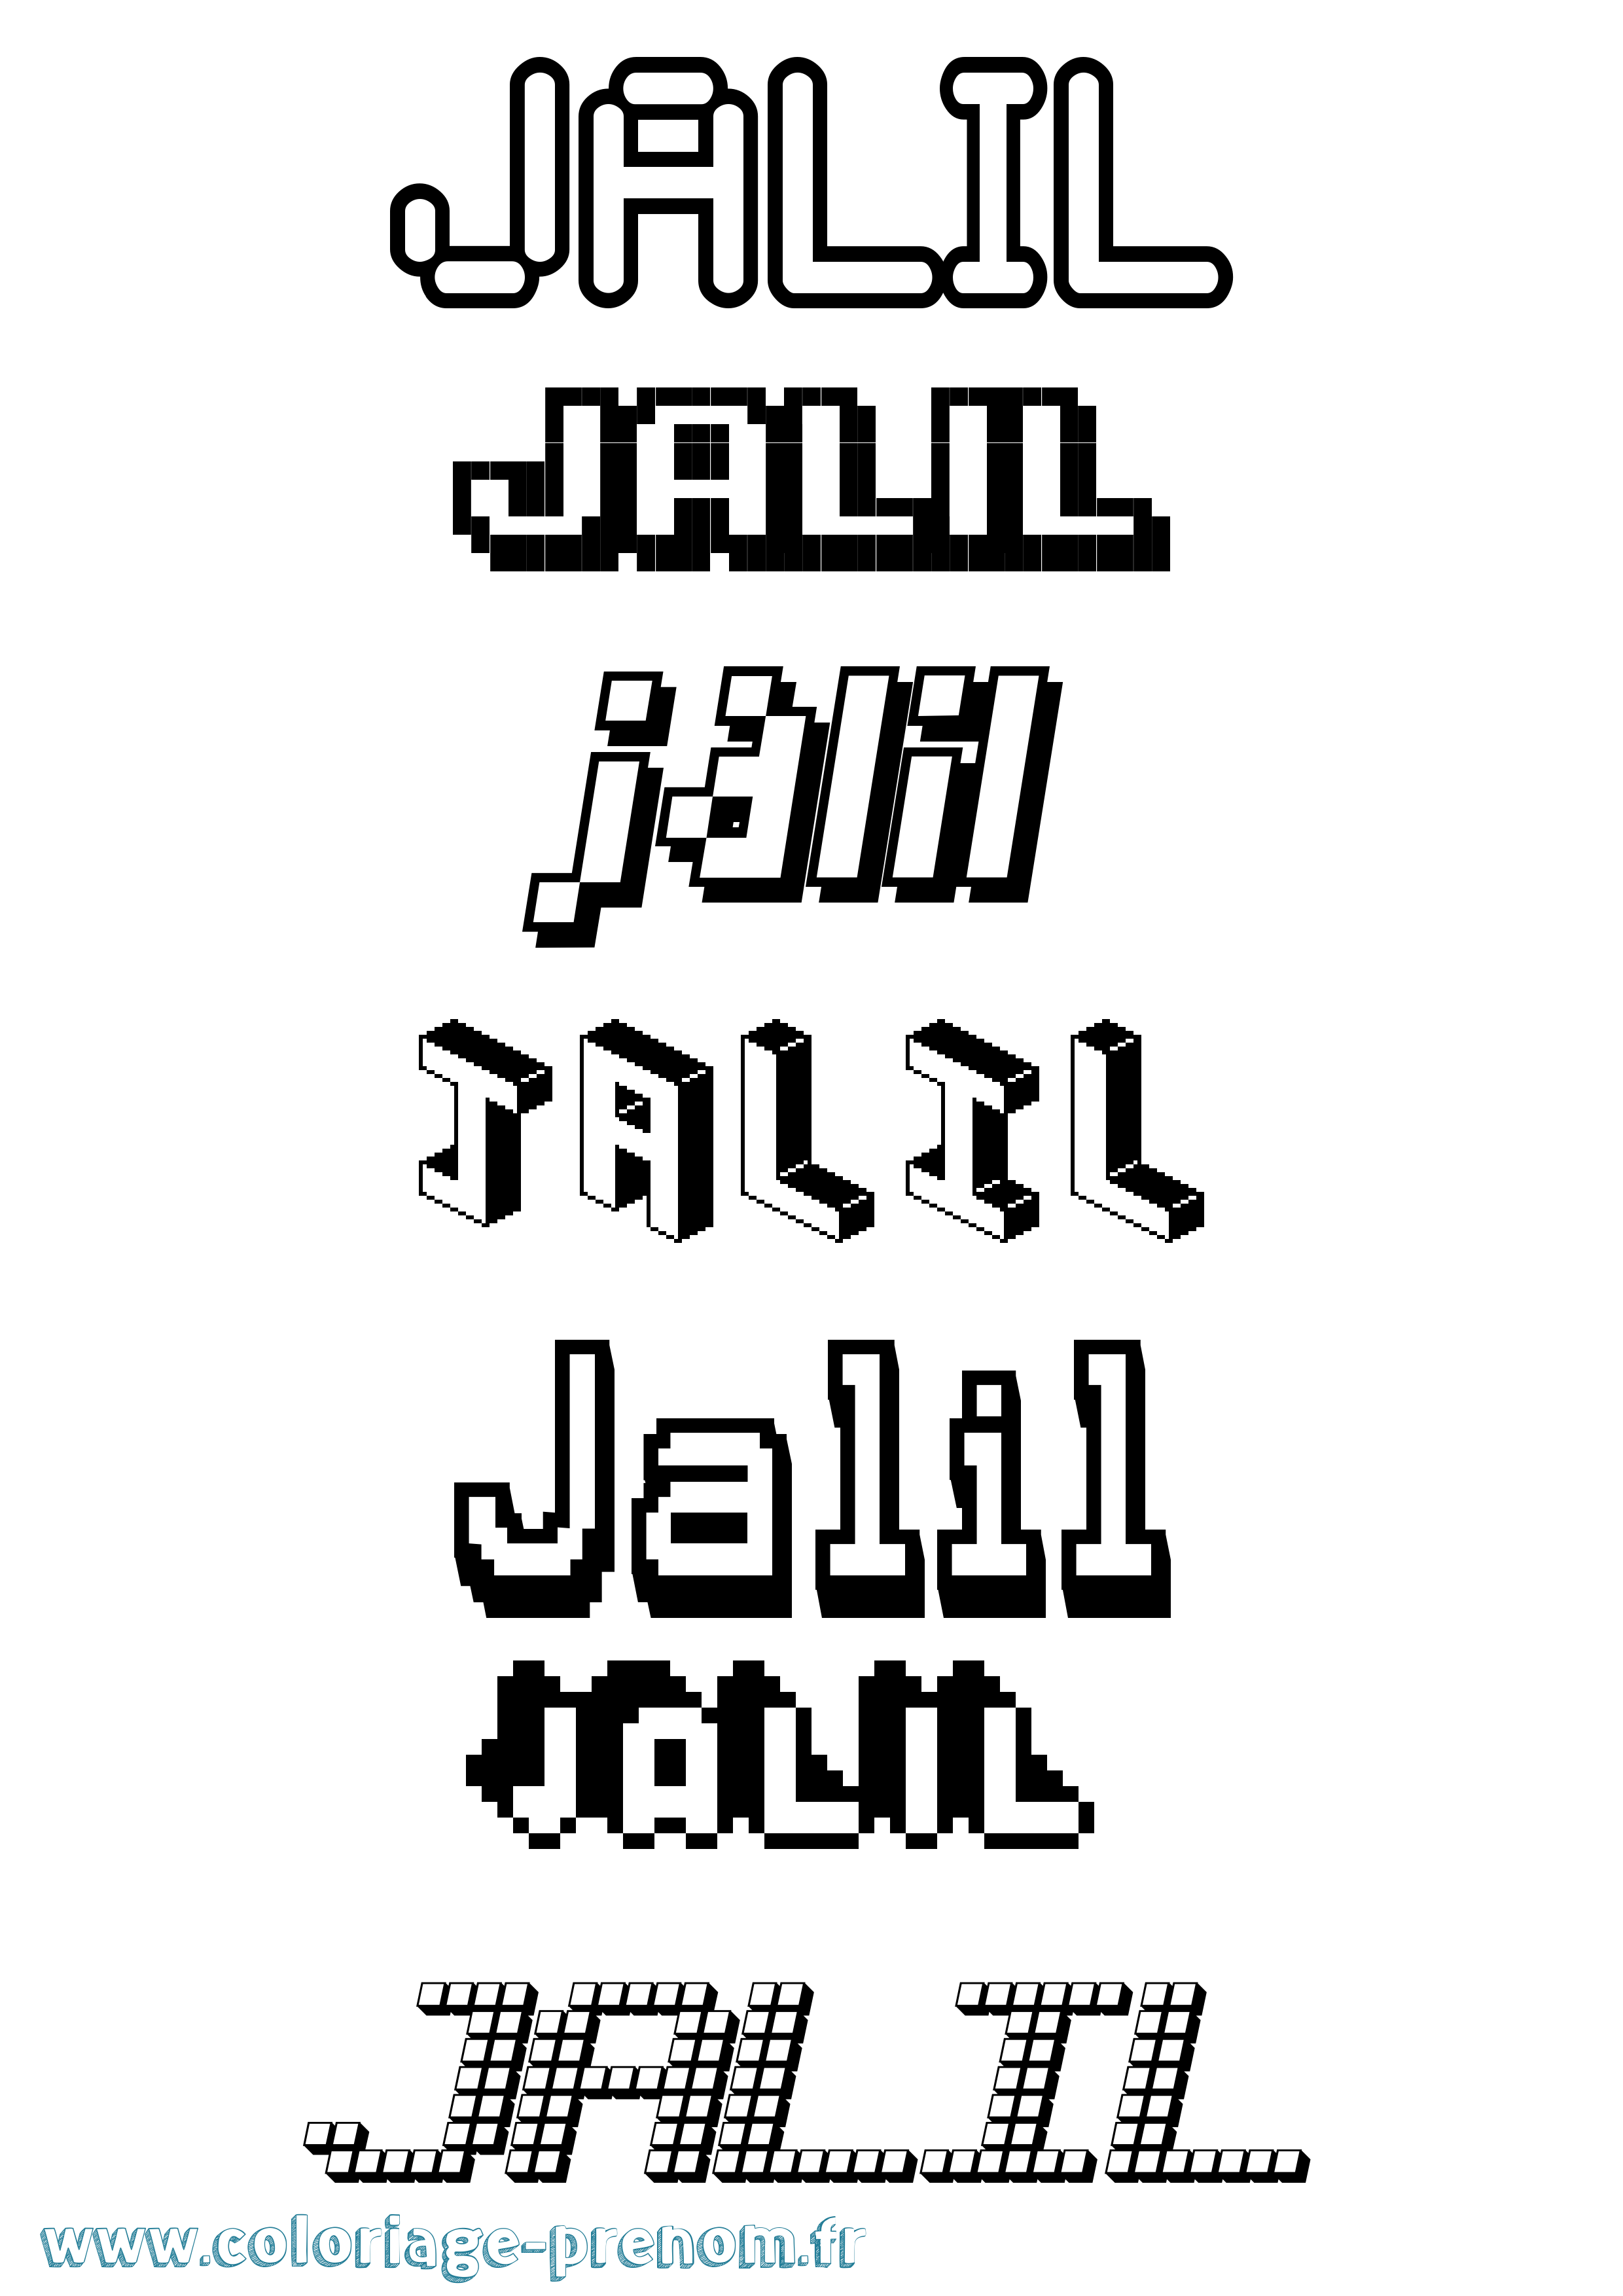 Coloriage prénom Jalil Pixel